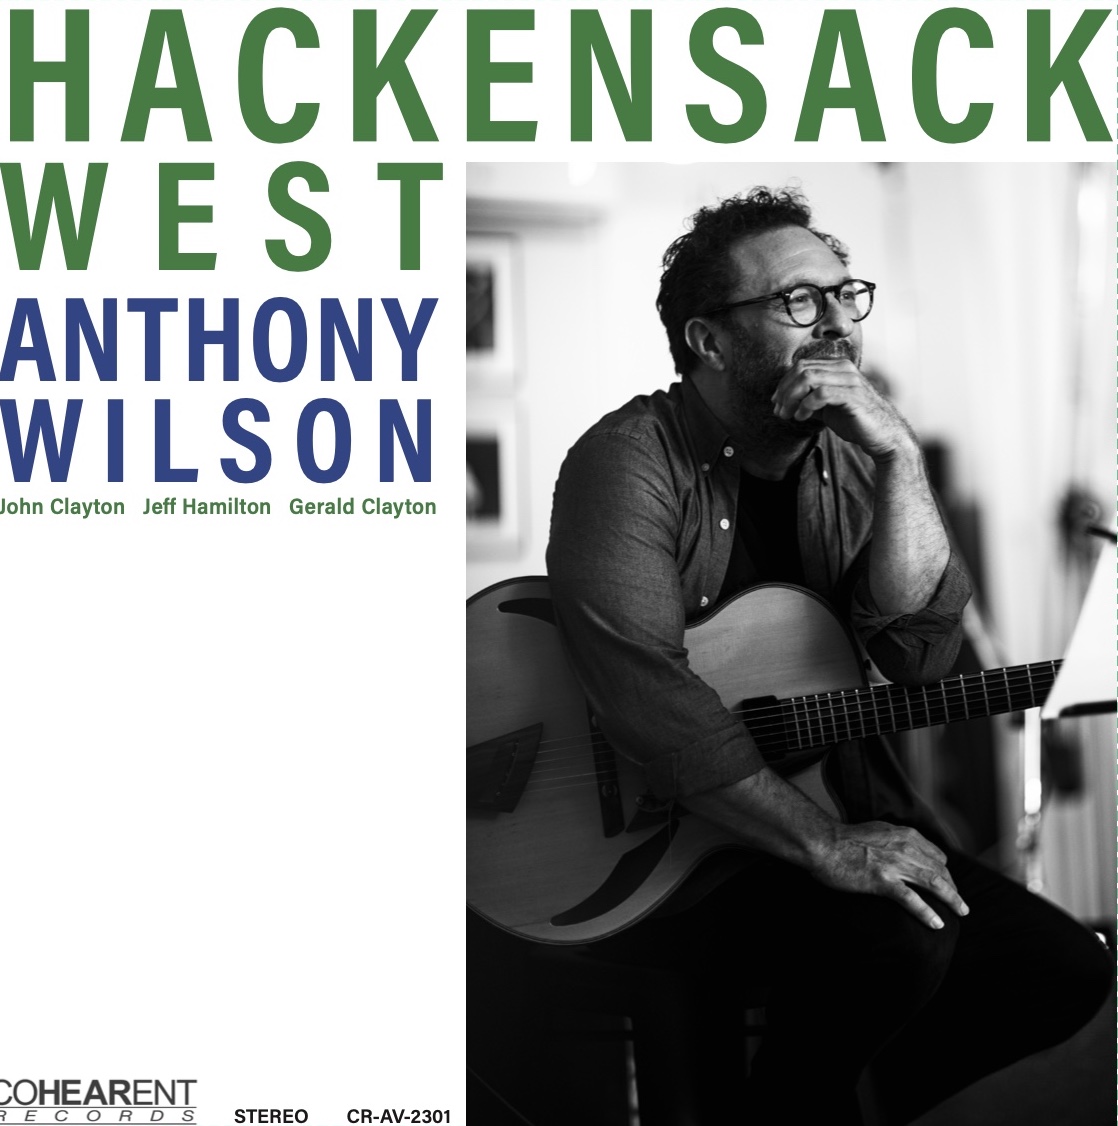 Hackensack West—Anthony Wilson